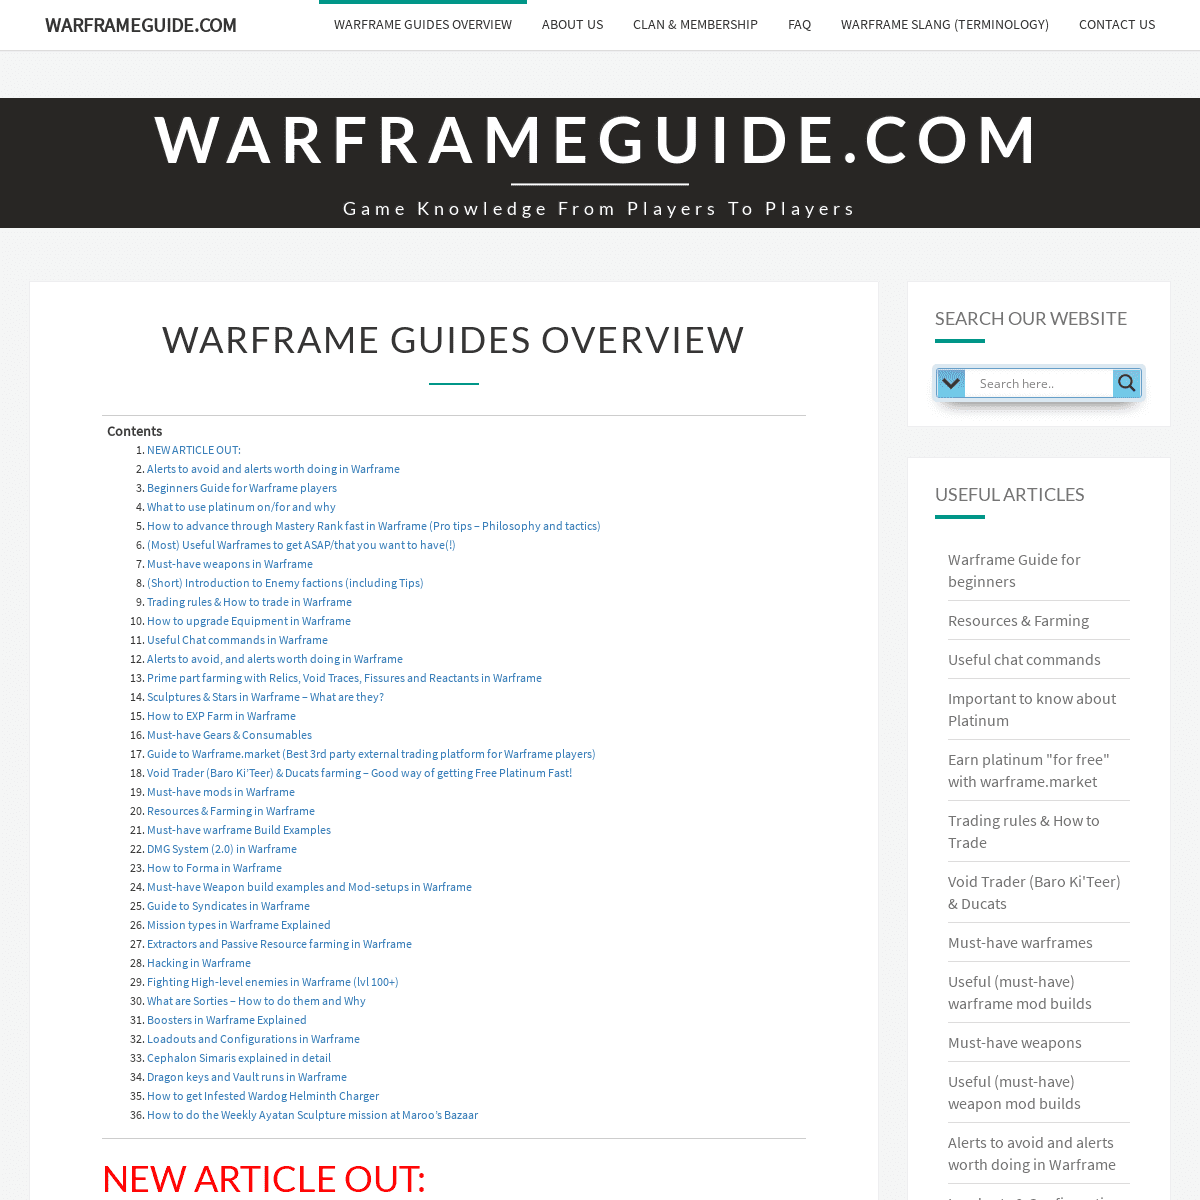 A complete backup of warframeguide.com